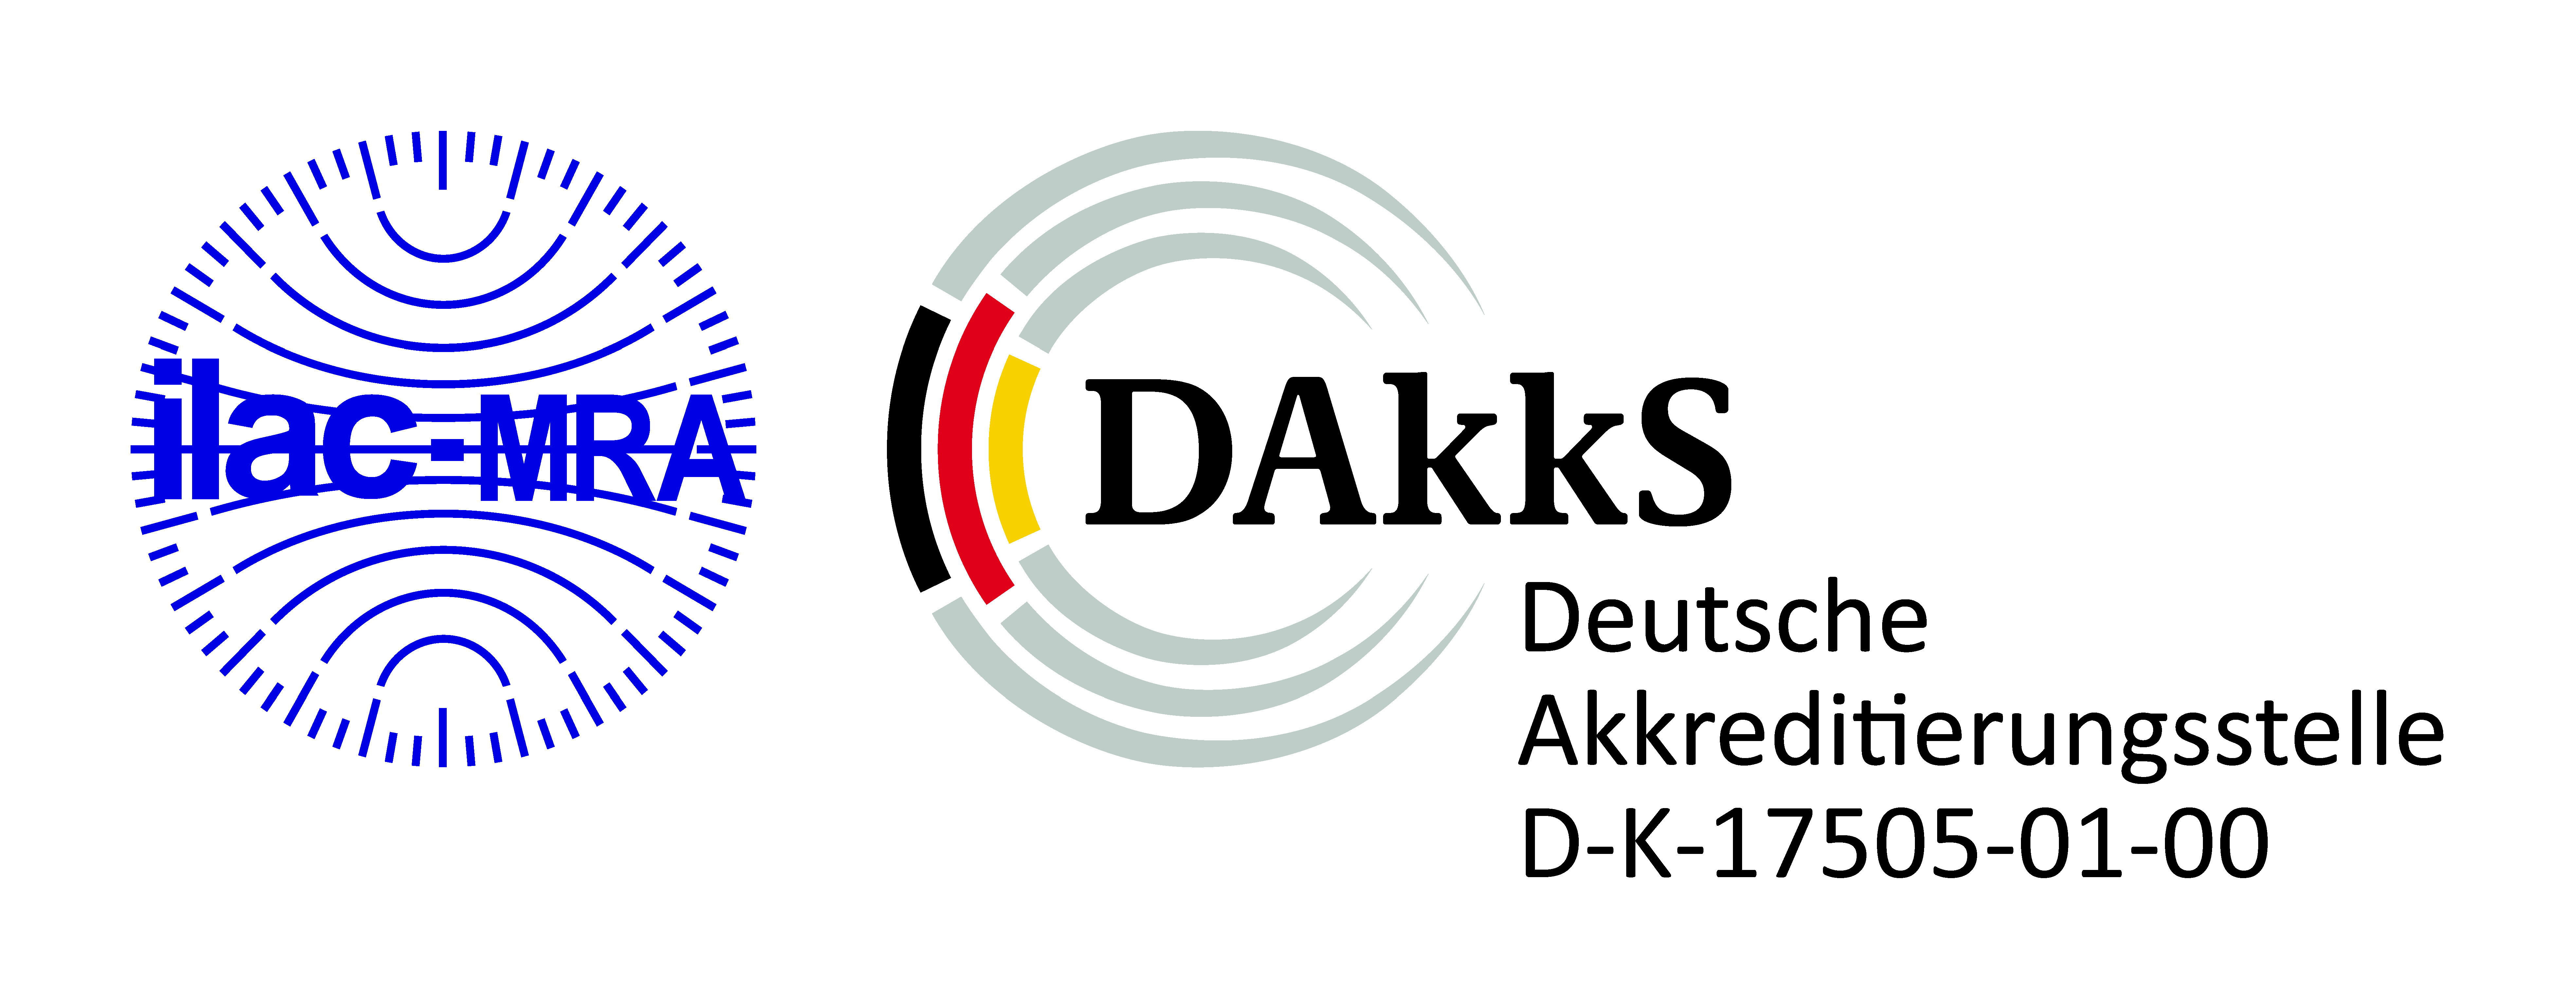 ILAC_DAkkS-Logo